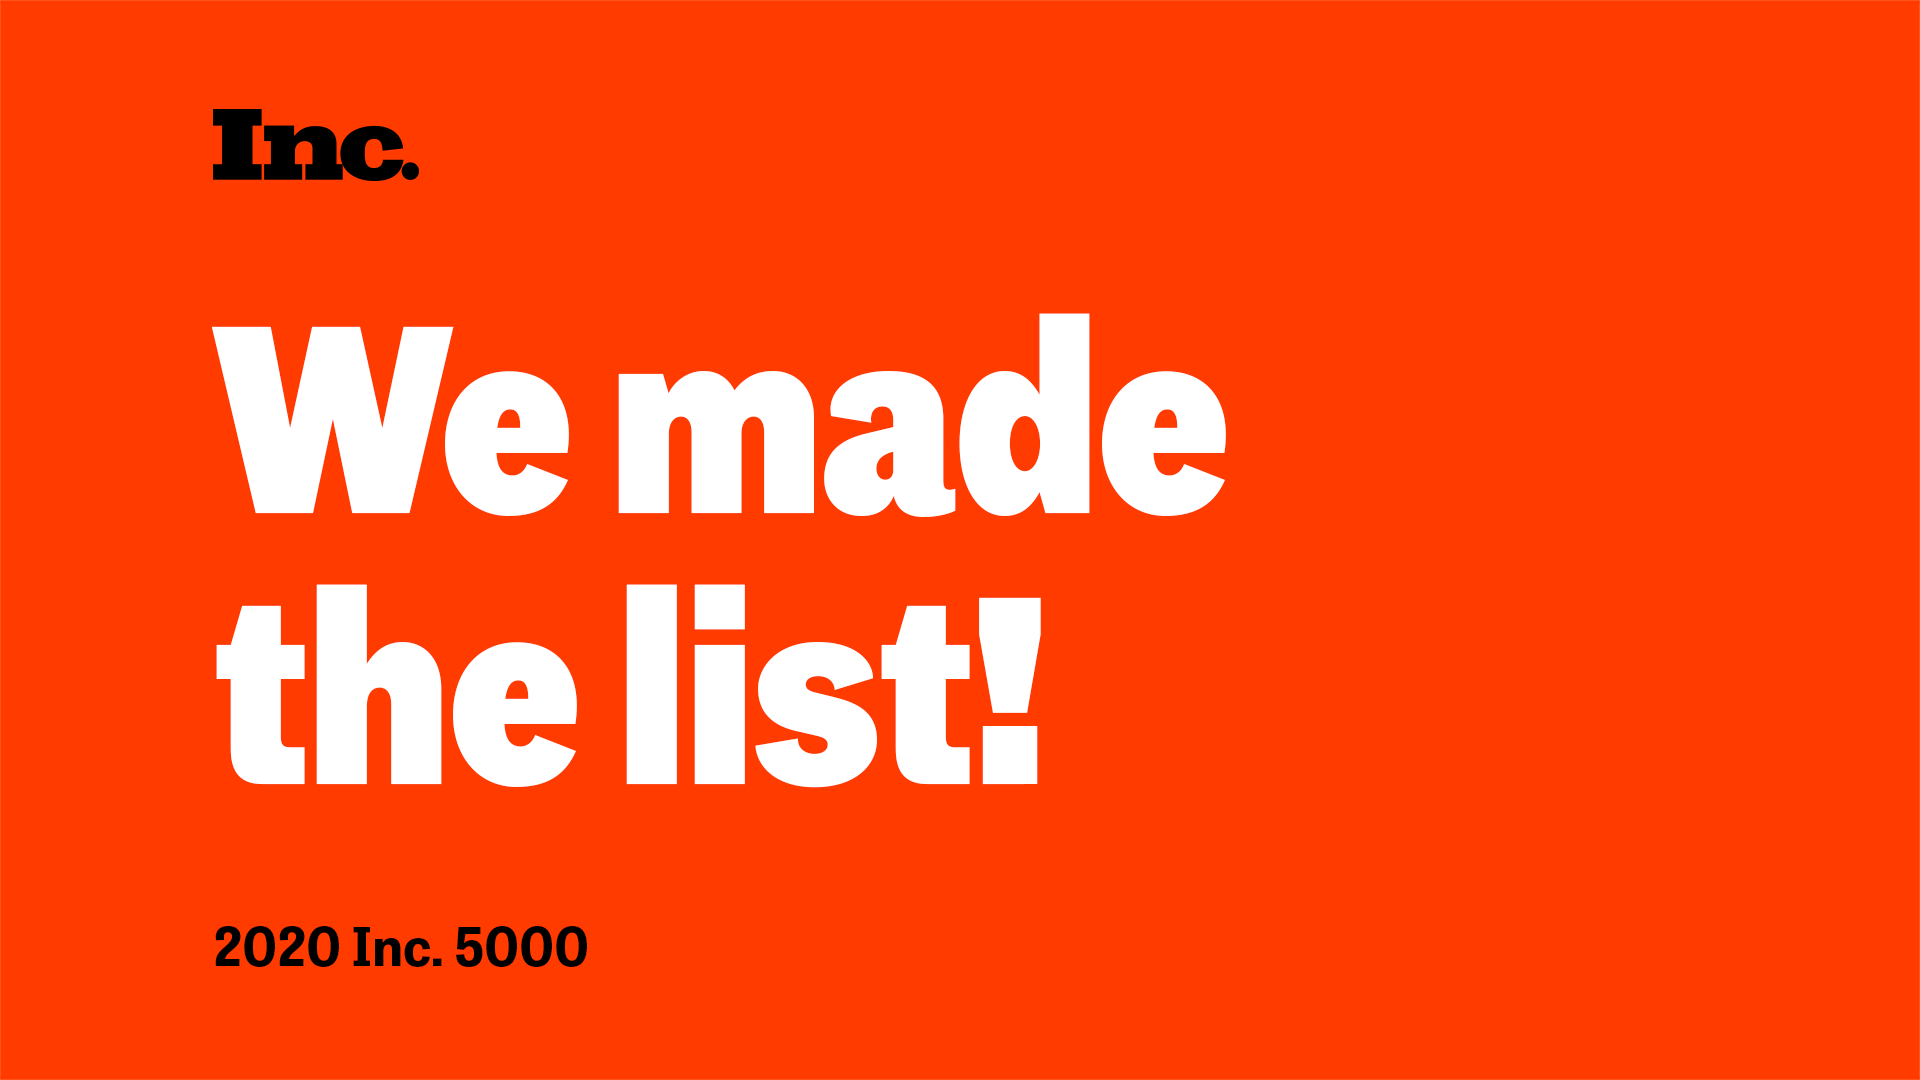 Inc. We made the list! 2020 Inc. 5000